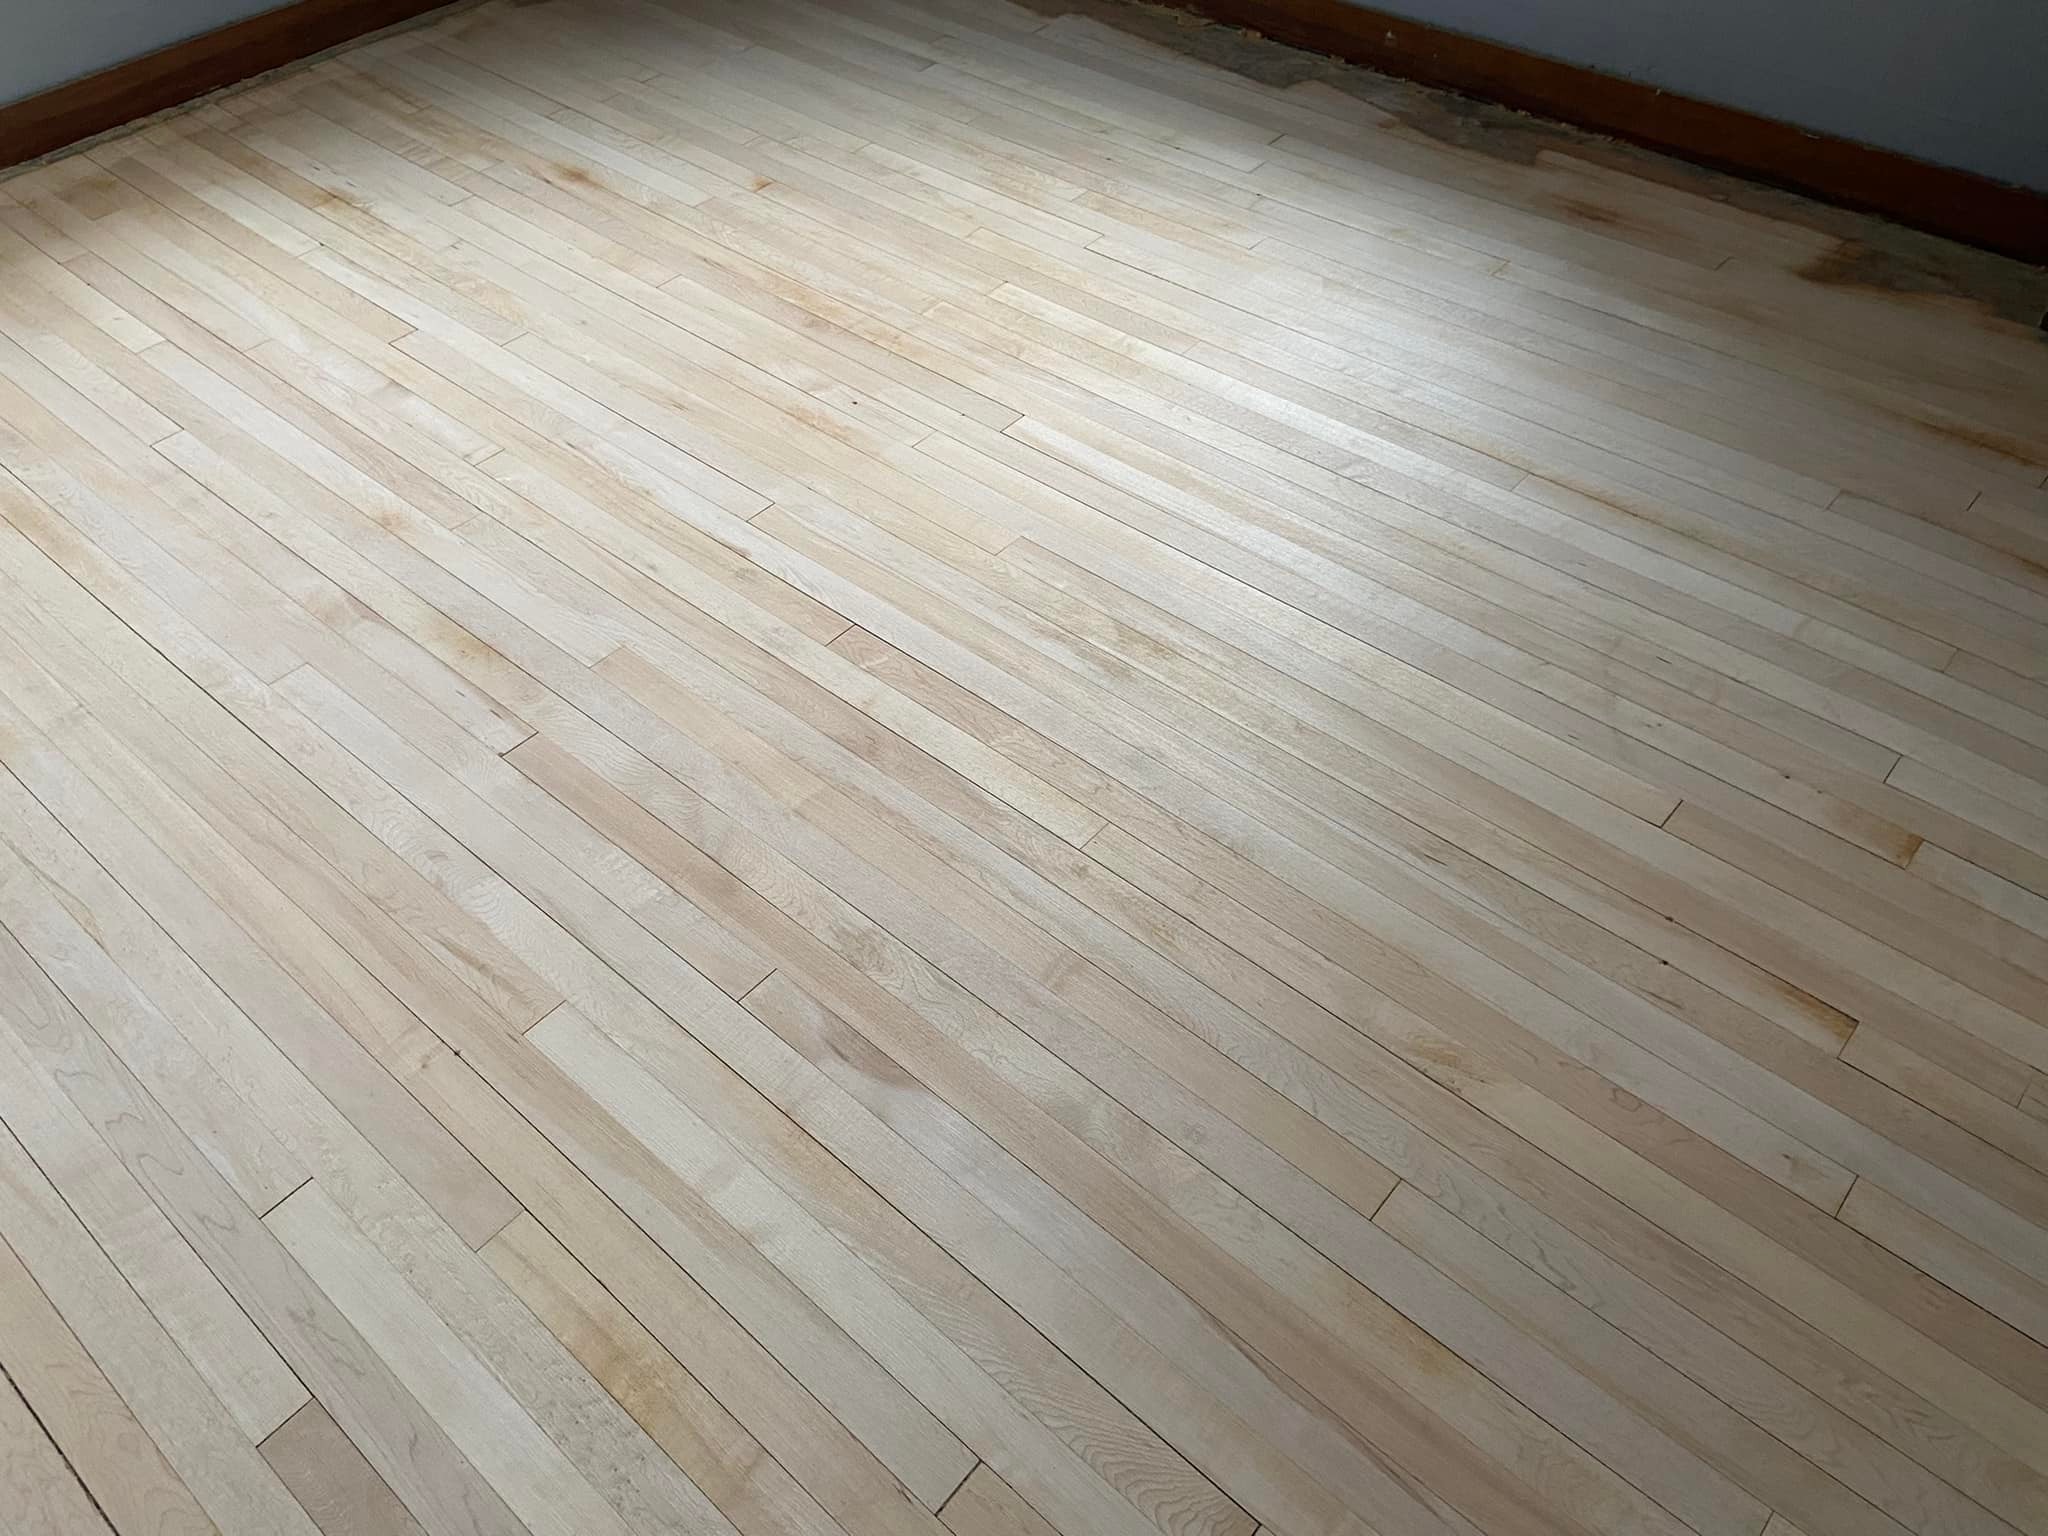 Hardwood floor refinishing by Bodanske Wood Flooring